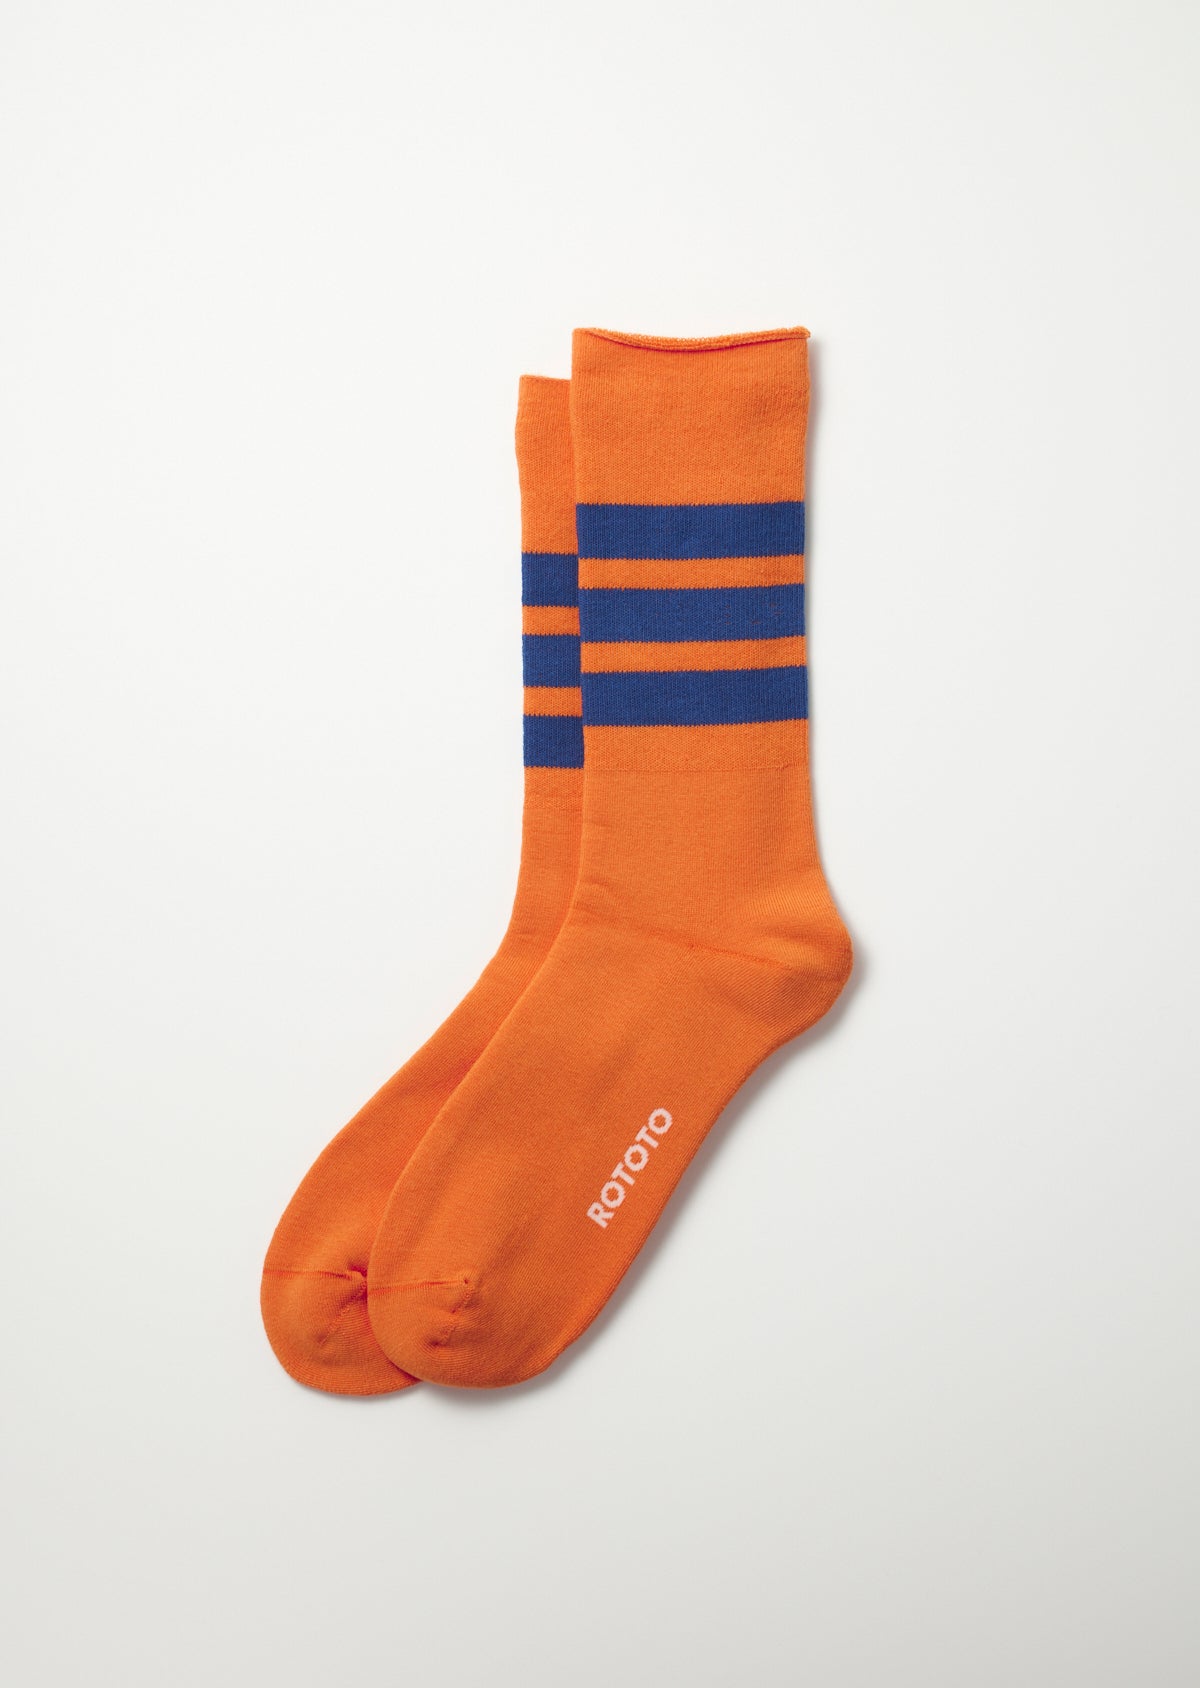 Rototo Fine Pile Striped Crew Socks in orange and deep blue